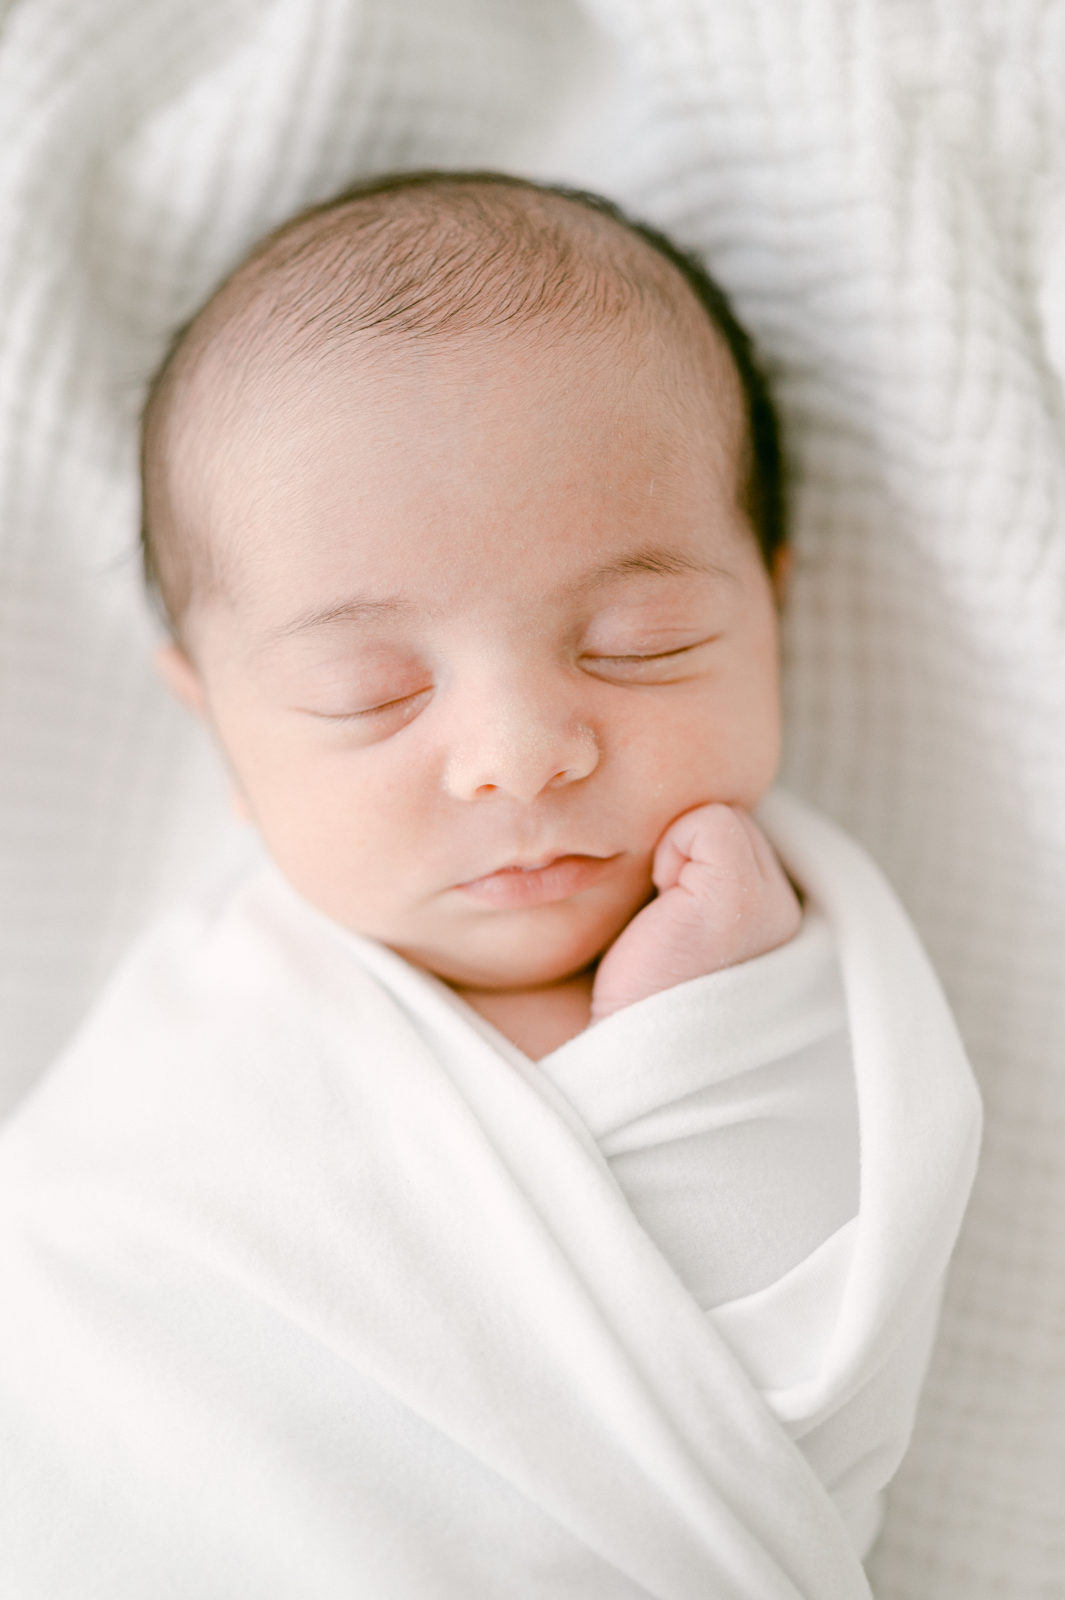 Lifestyle newborn portrait of baby